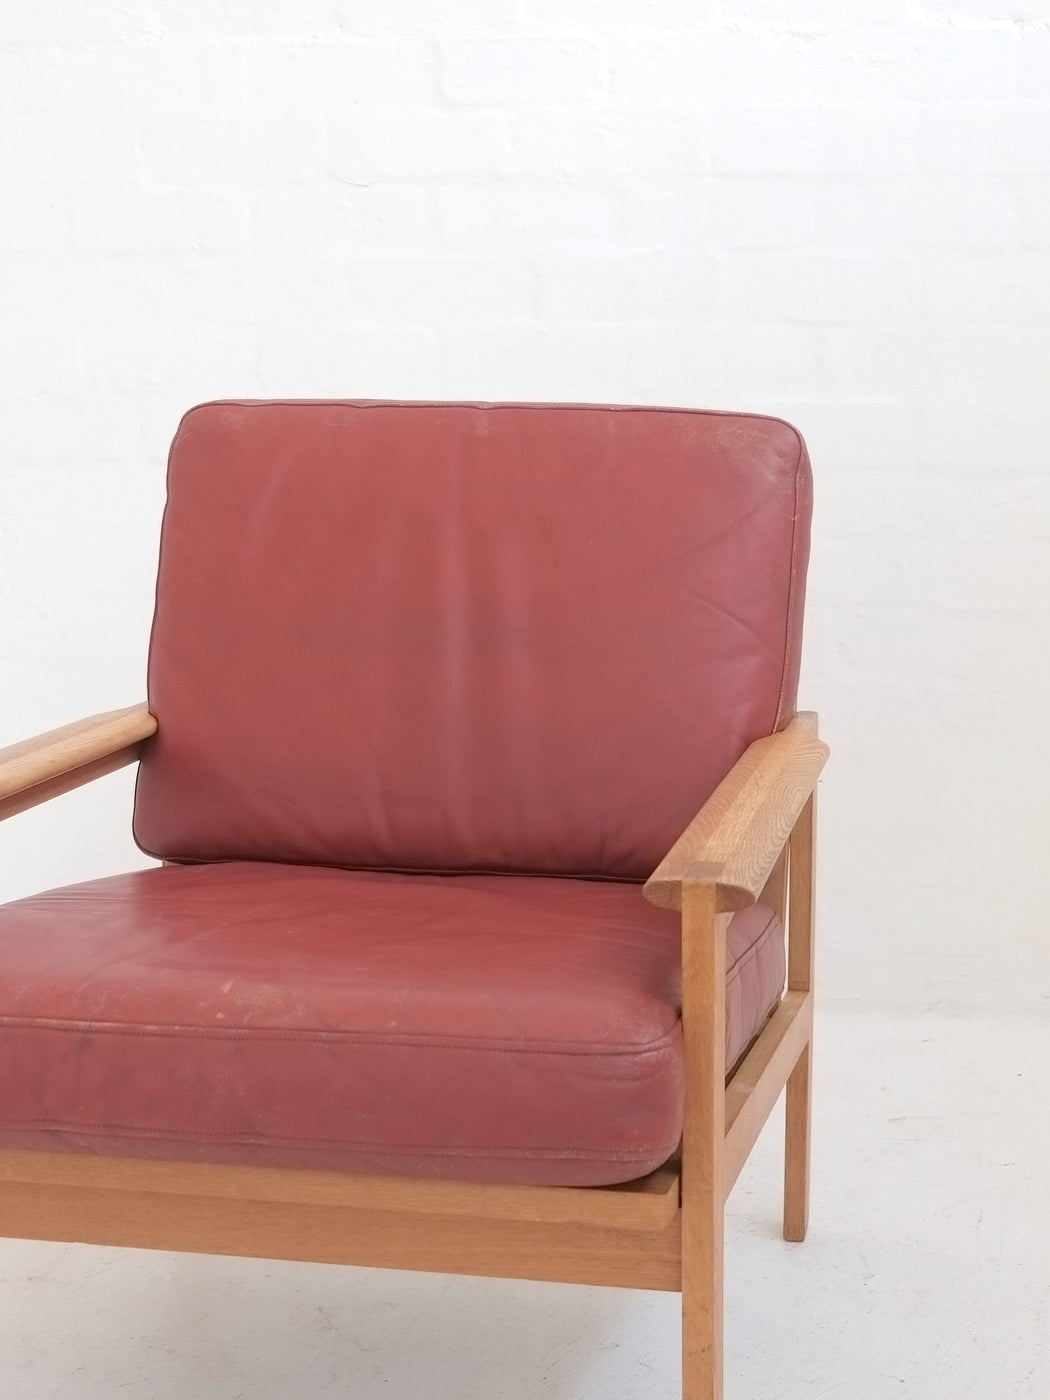 Illum Wikkelso ‘Capella’ Chair